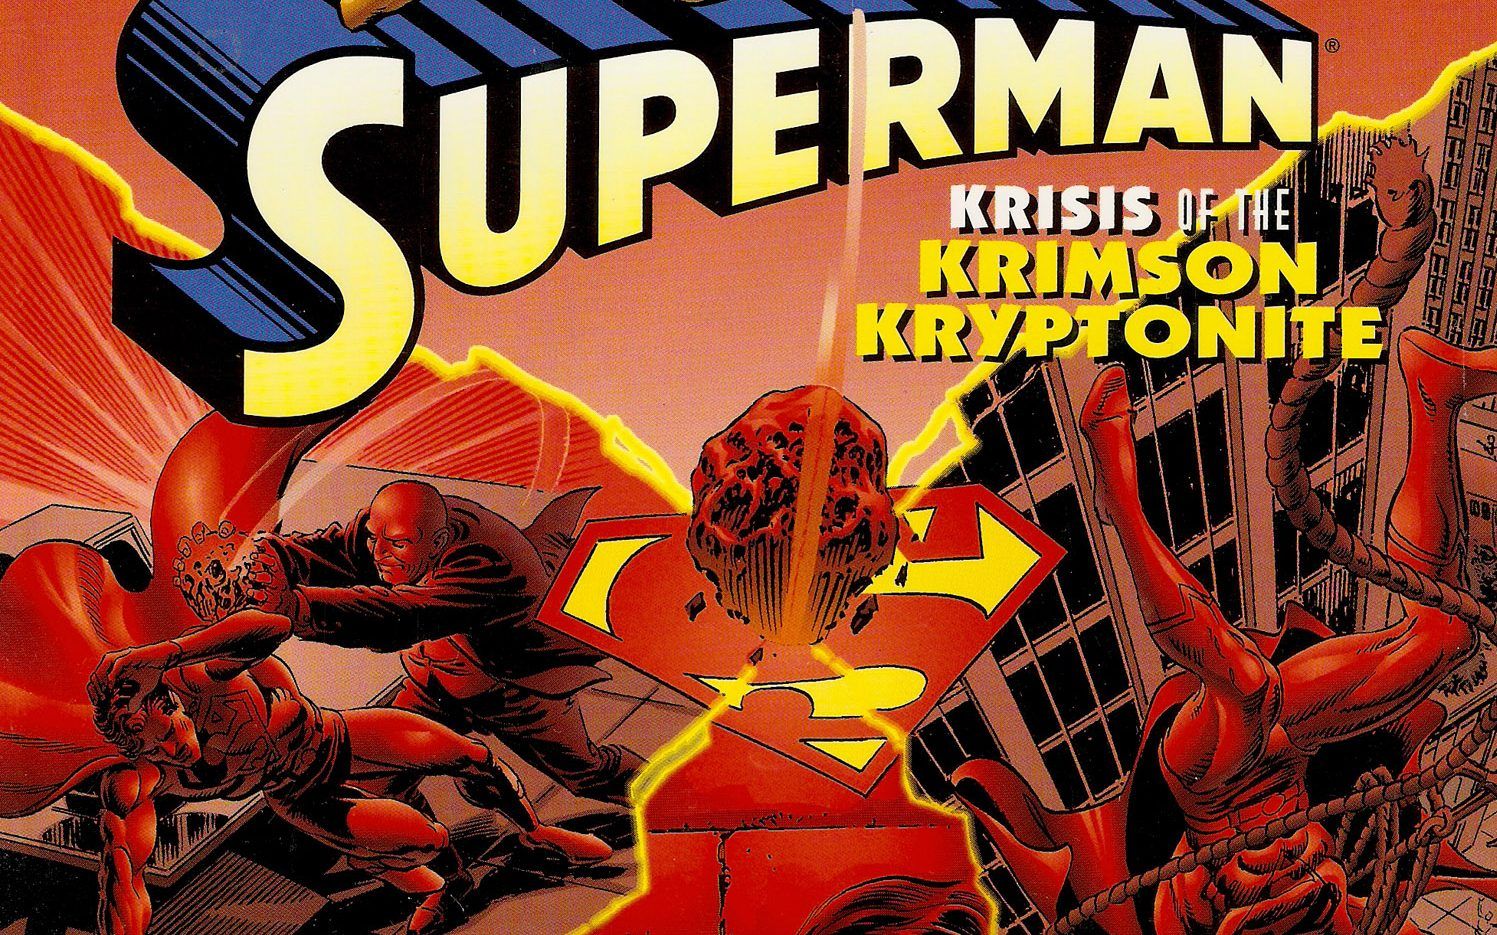 Krimson Kryptonite